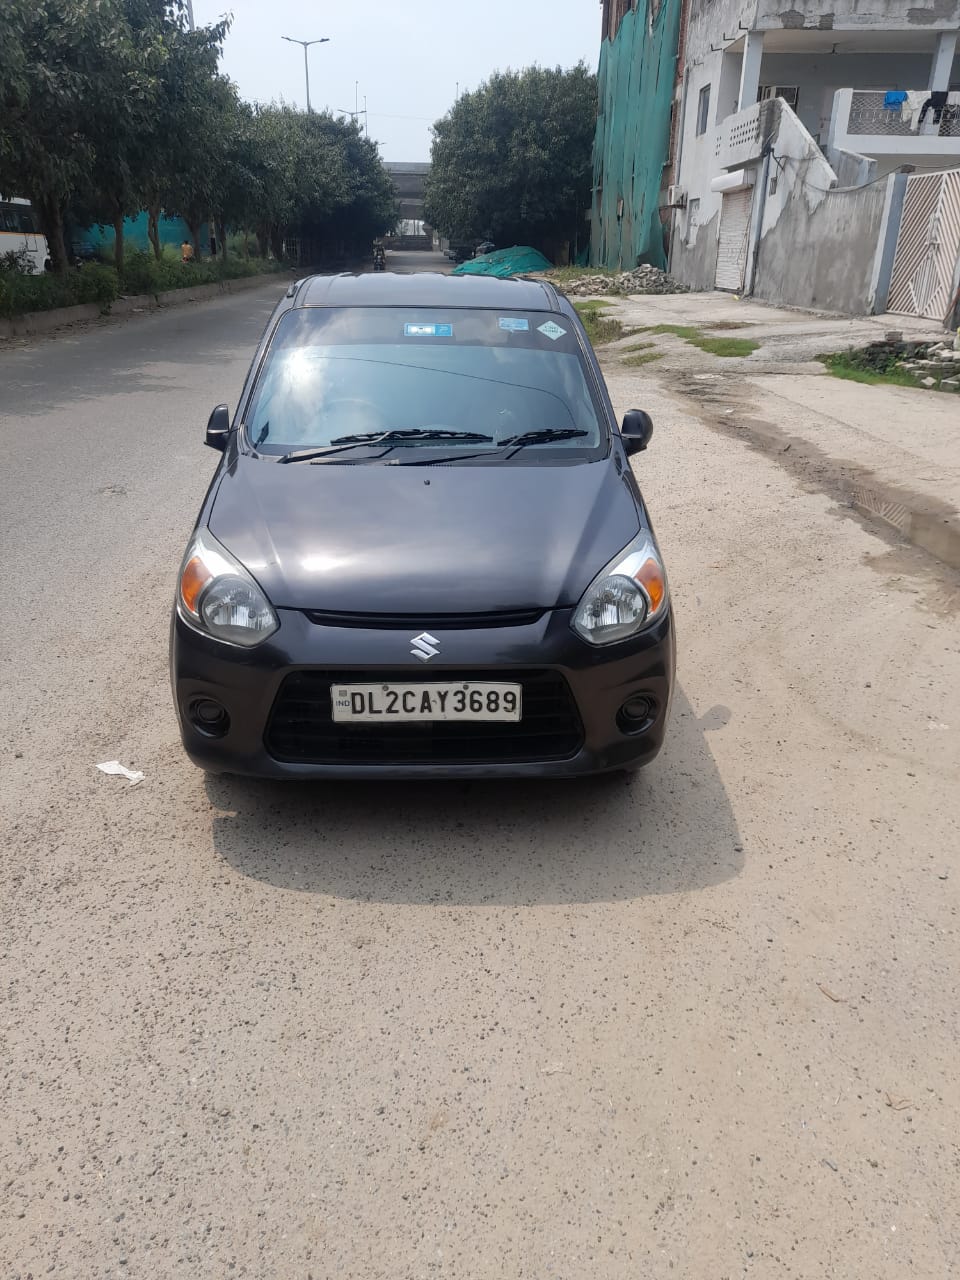 Secondhand Alto 800-Vxi-Cng car in Dwarka and Uttam Nagar